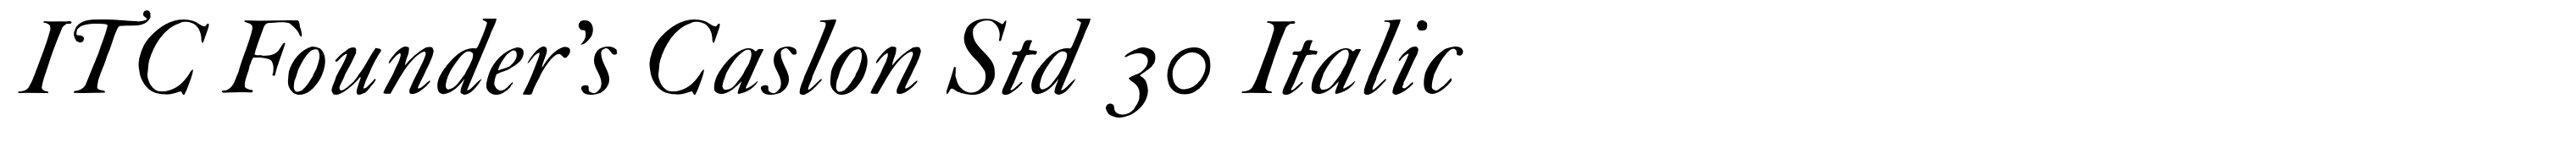 ITC Founder's Caslon Std 30 Italic